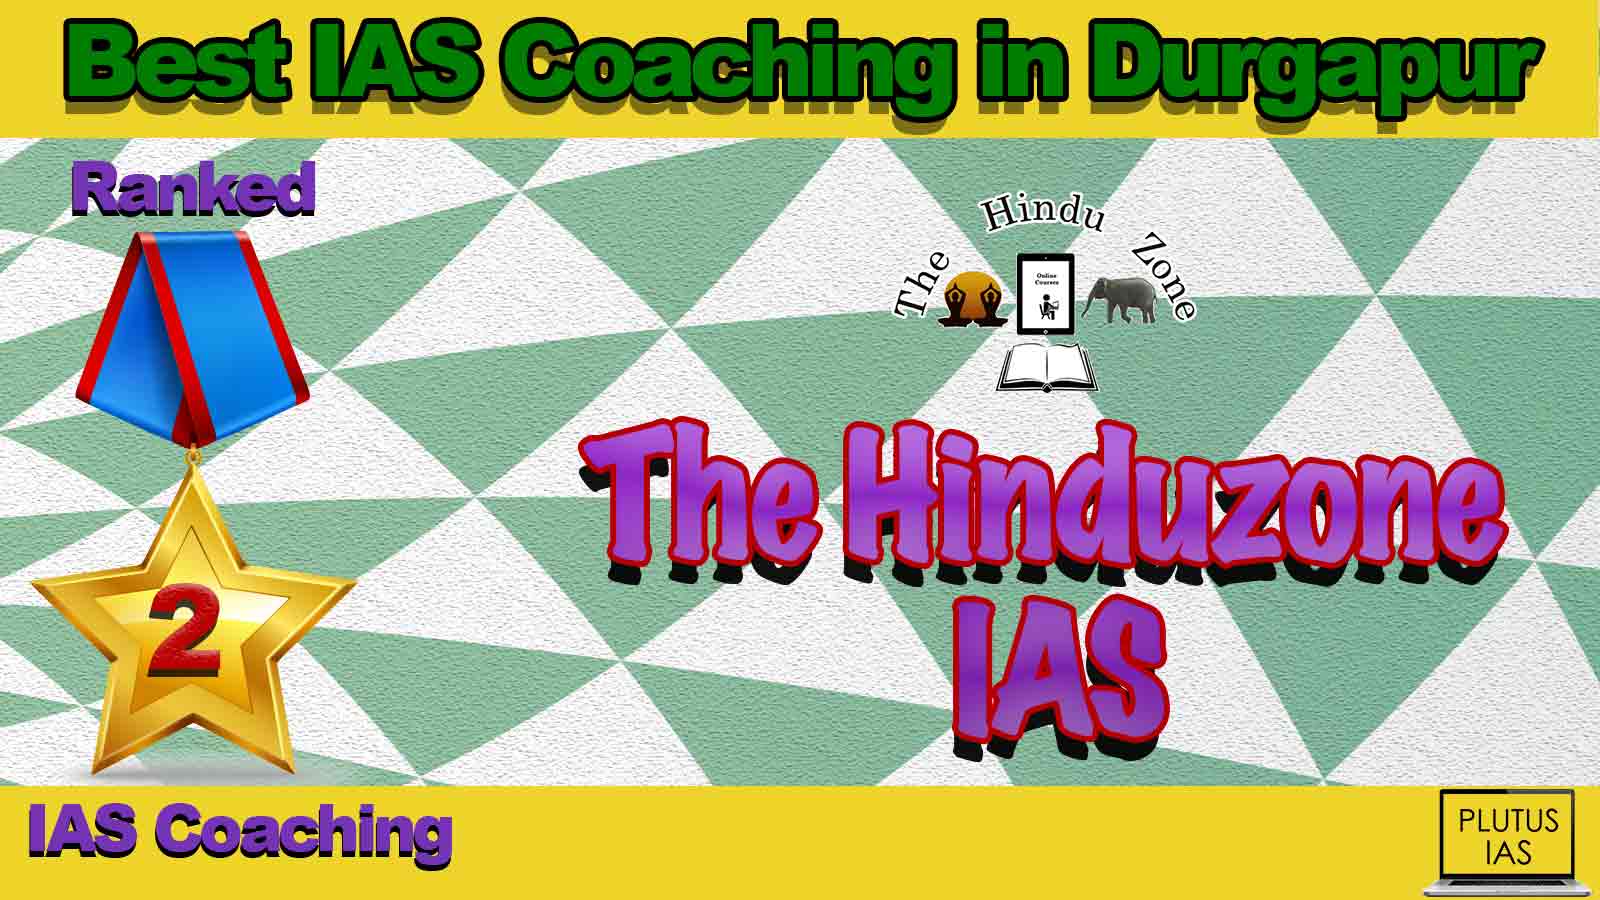 Top IAS Coaching in Durgapur